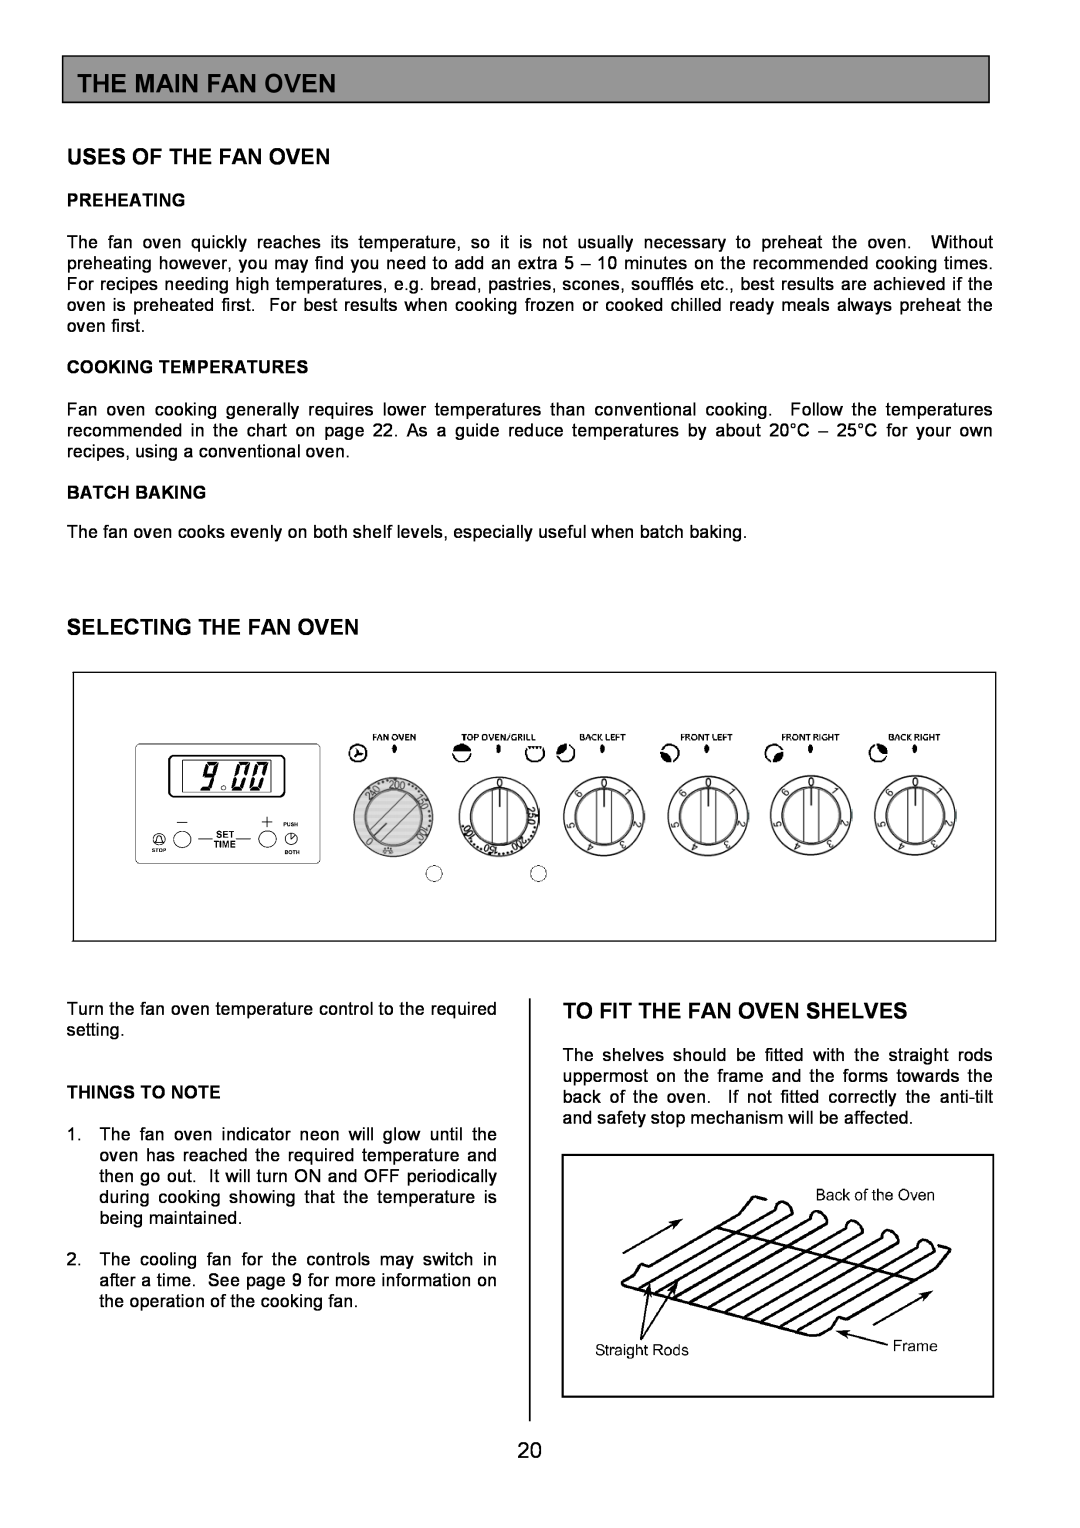 Tricity Bendix SE340 The Main Fan Oven, Uses Of The Fan Oven, Selecting The Fan Oven, To Fit The Fan Oven Shelves 